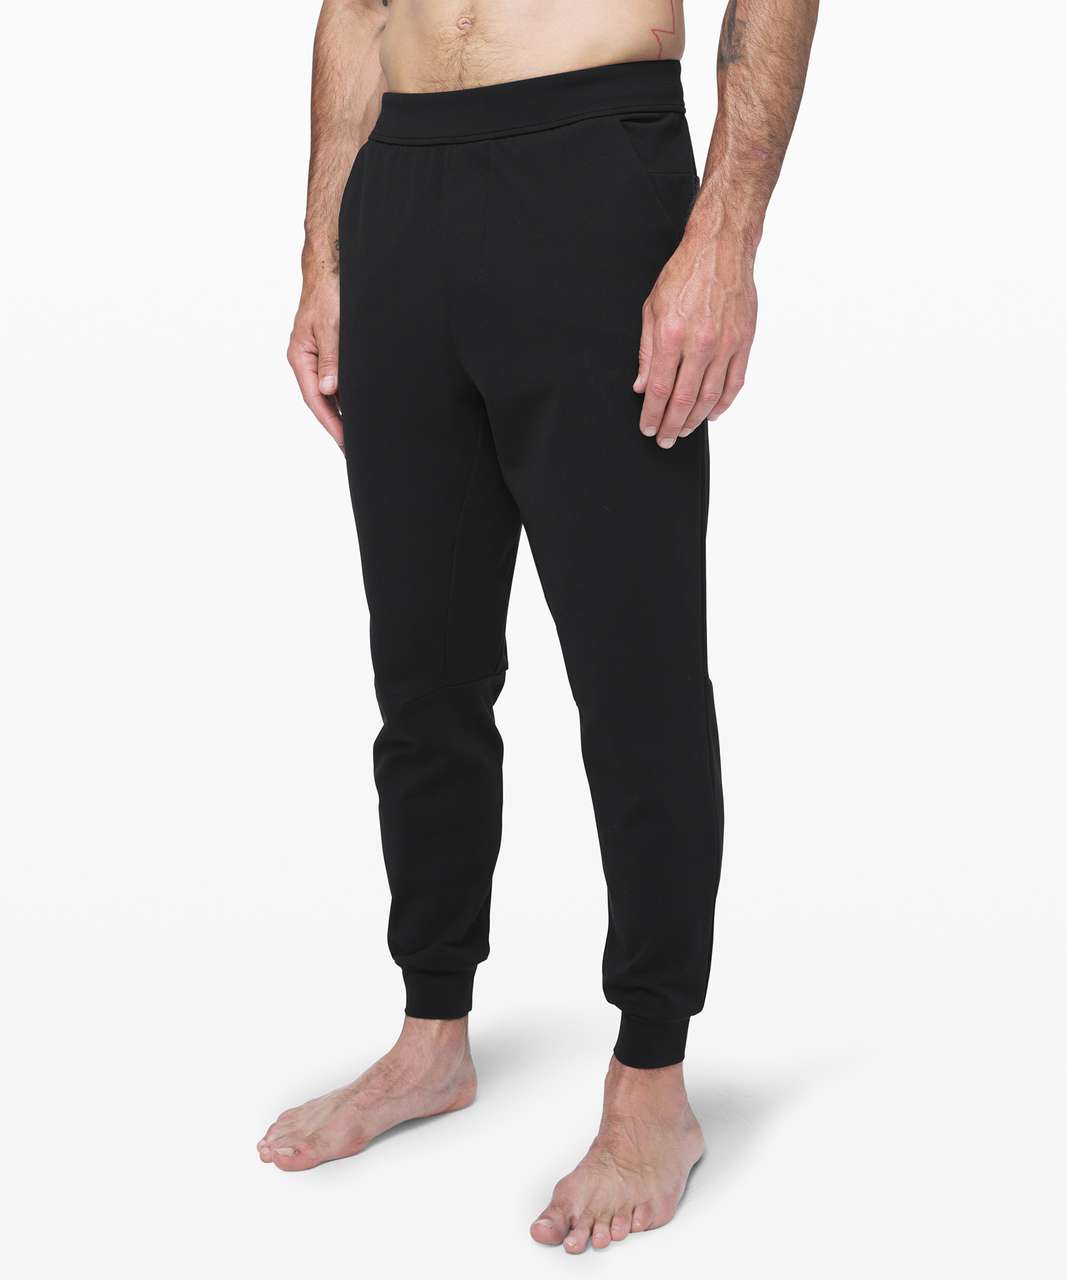 Lululemon Intent Jogger Size: S - Black  Black jogger pants, Black joggers,  Clothes design